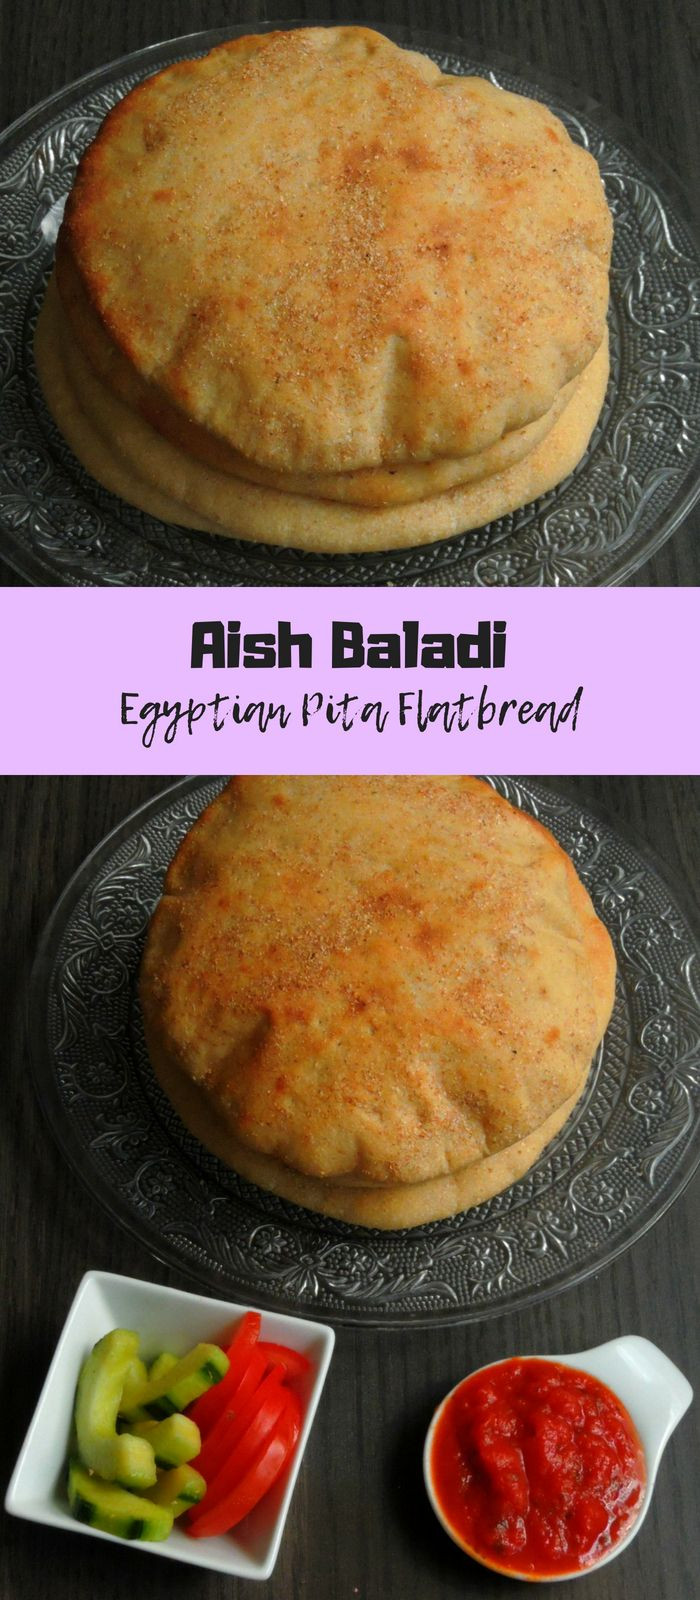 Middle Eastern Flat Bread Recipes
 Aish Baladi Egyptian Flatbread